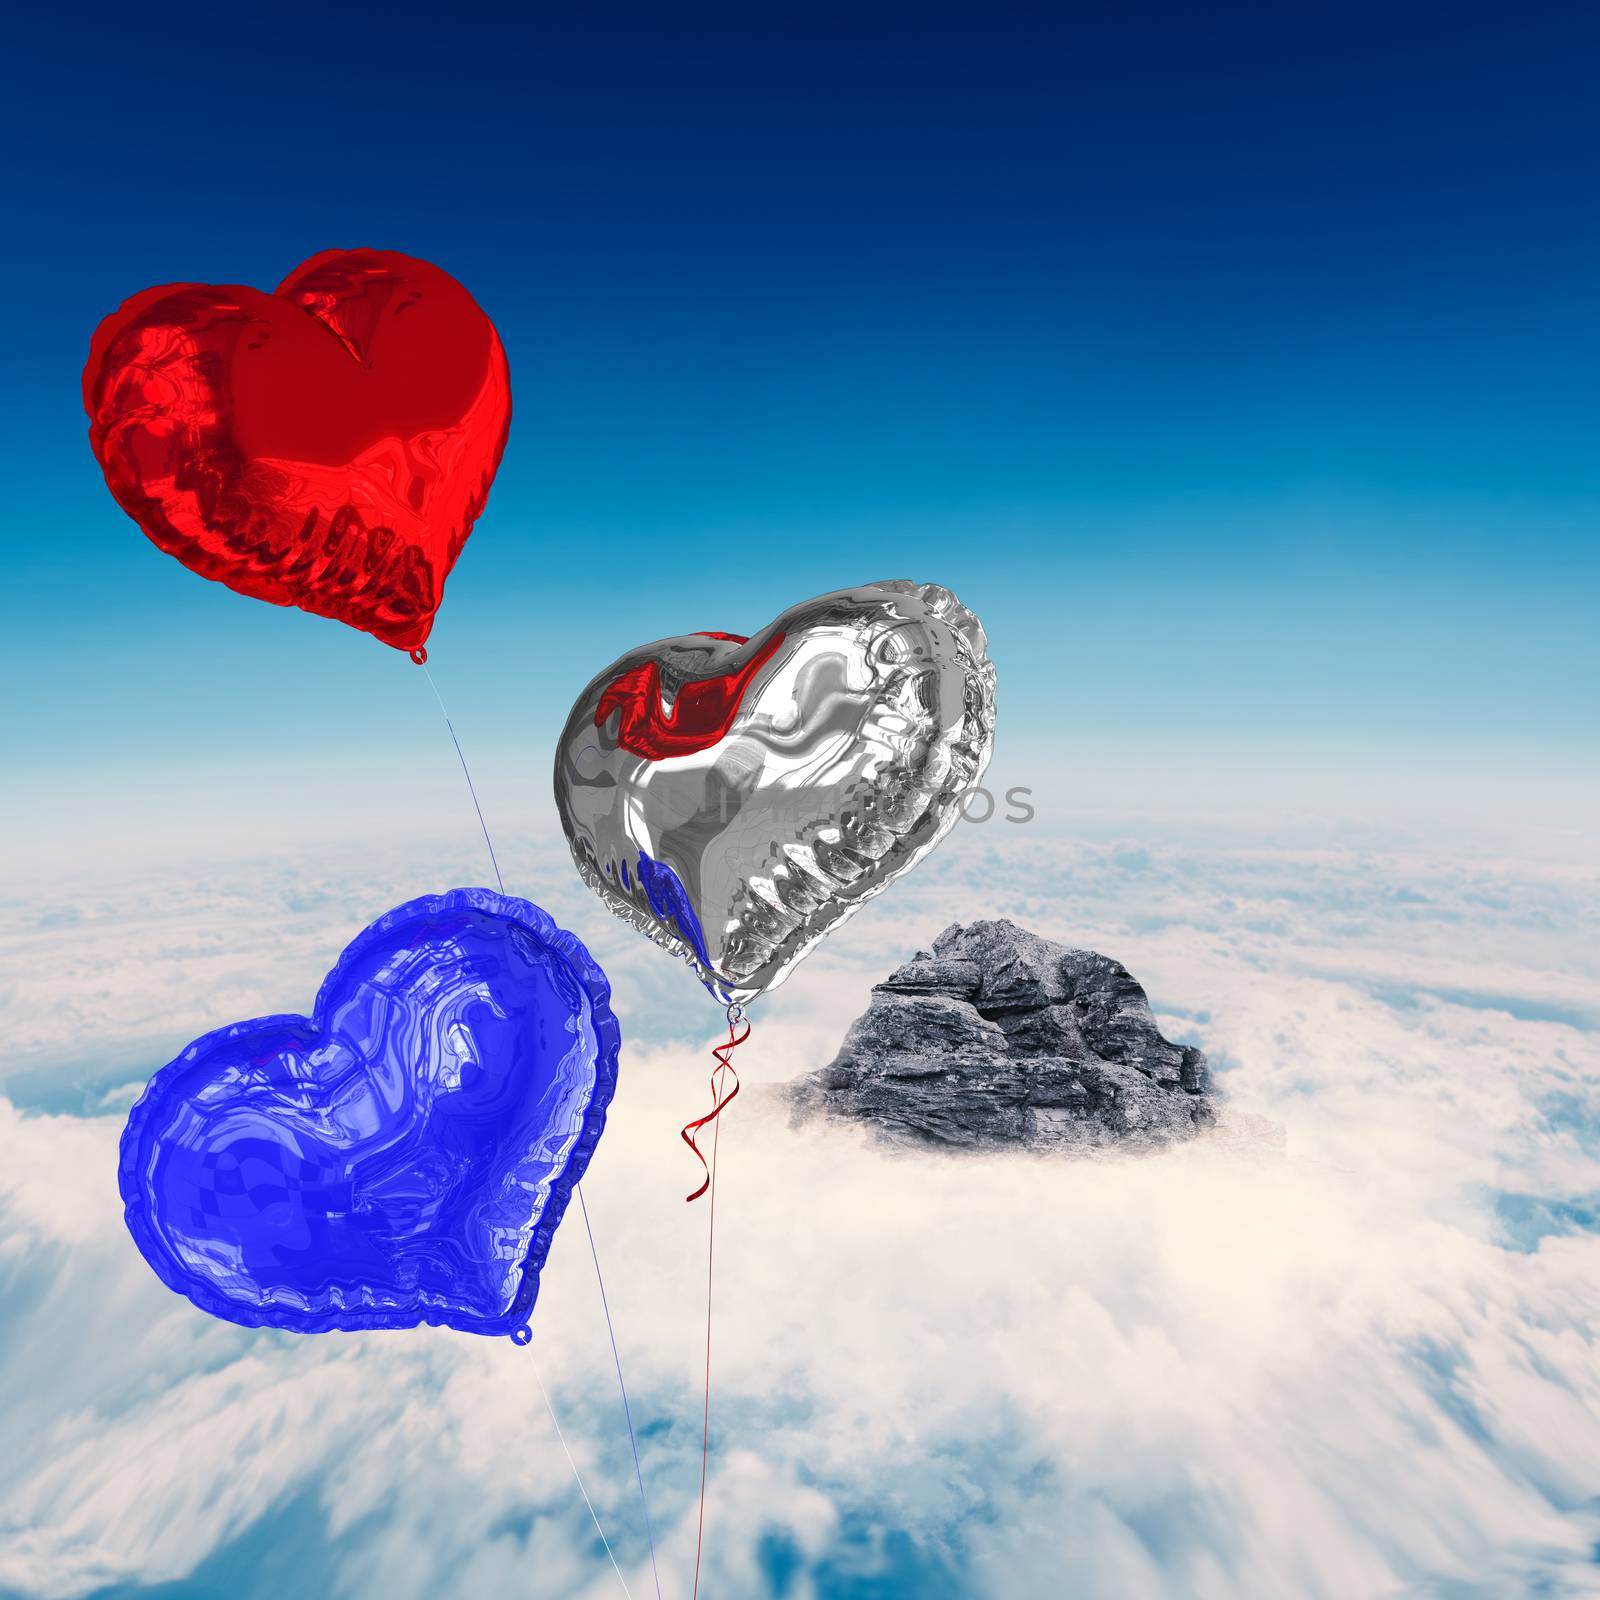 Heart balloons against mountain peak through the clouds